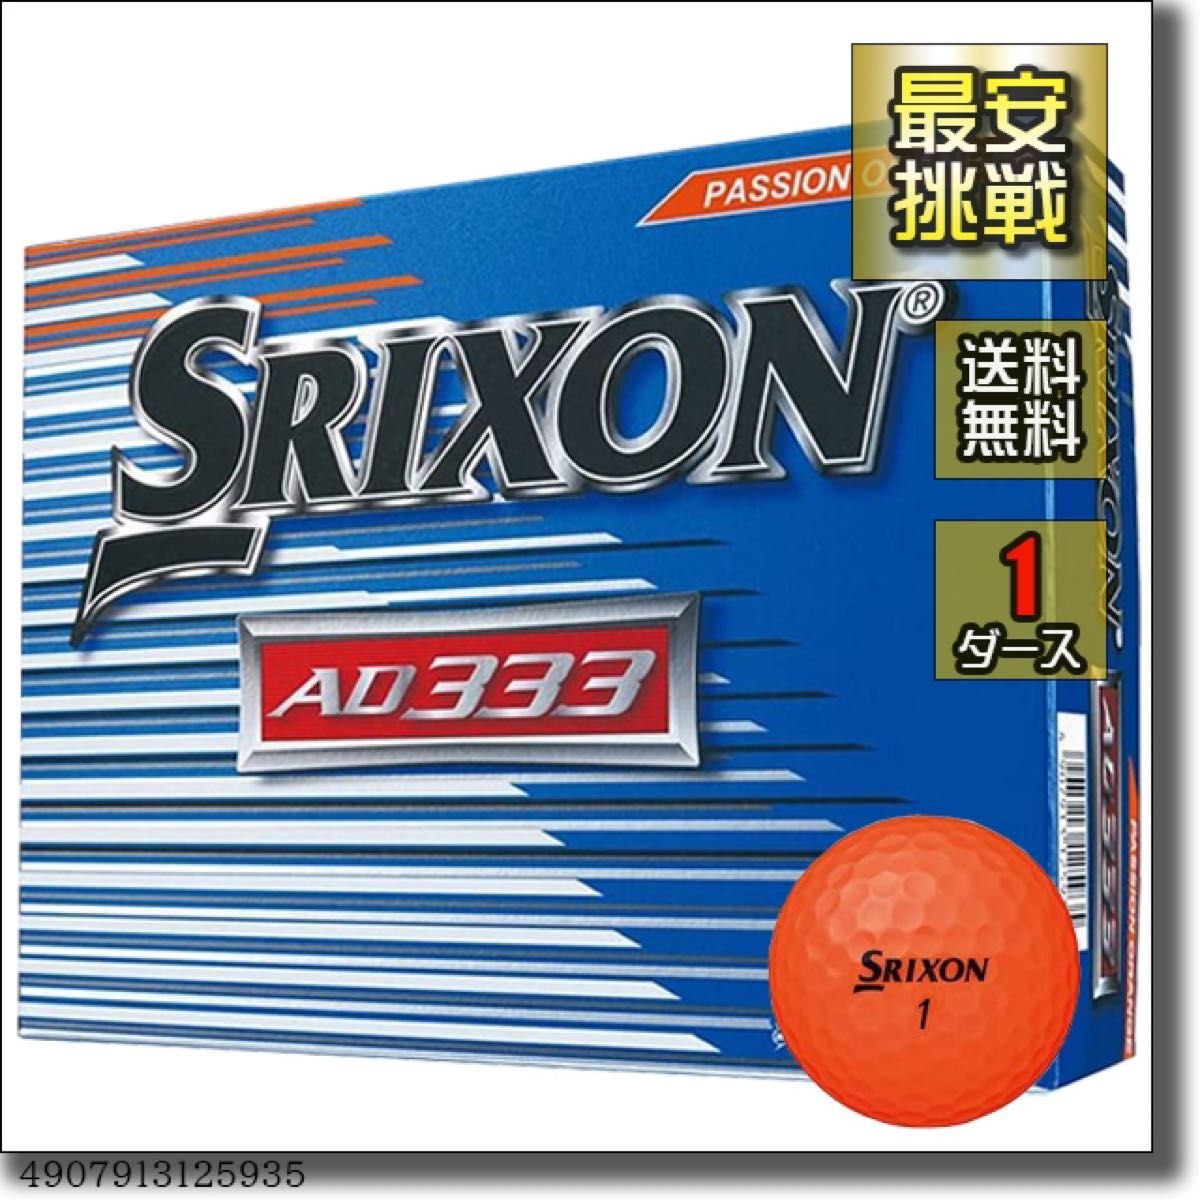 62%OFF!】 新品未使用品 SRIXON AD333 TOUR 4箱 4ダース 48球 sushitai